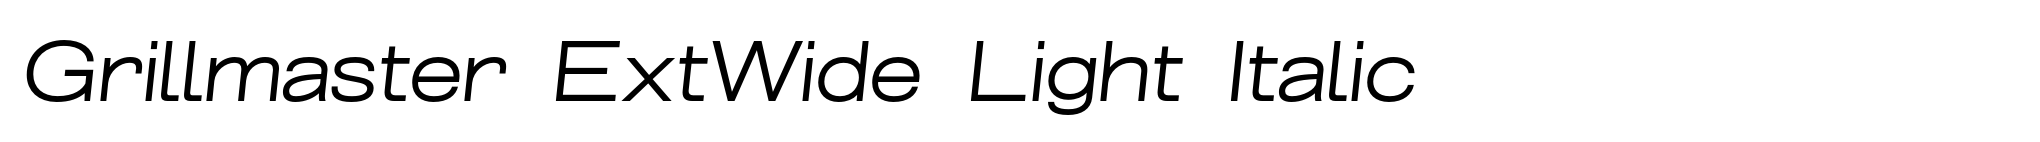 Grillmaster ExtWide Light Italic image